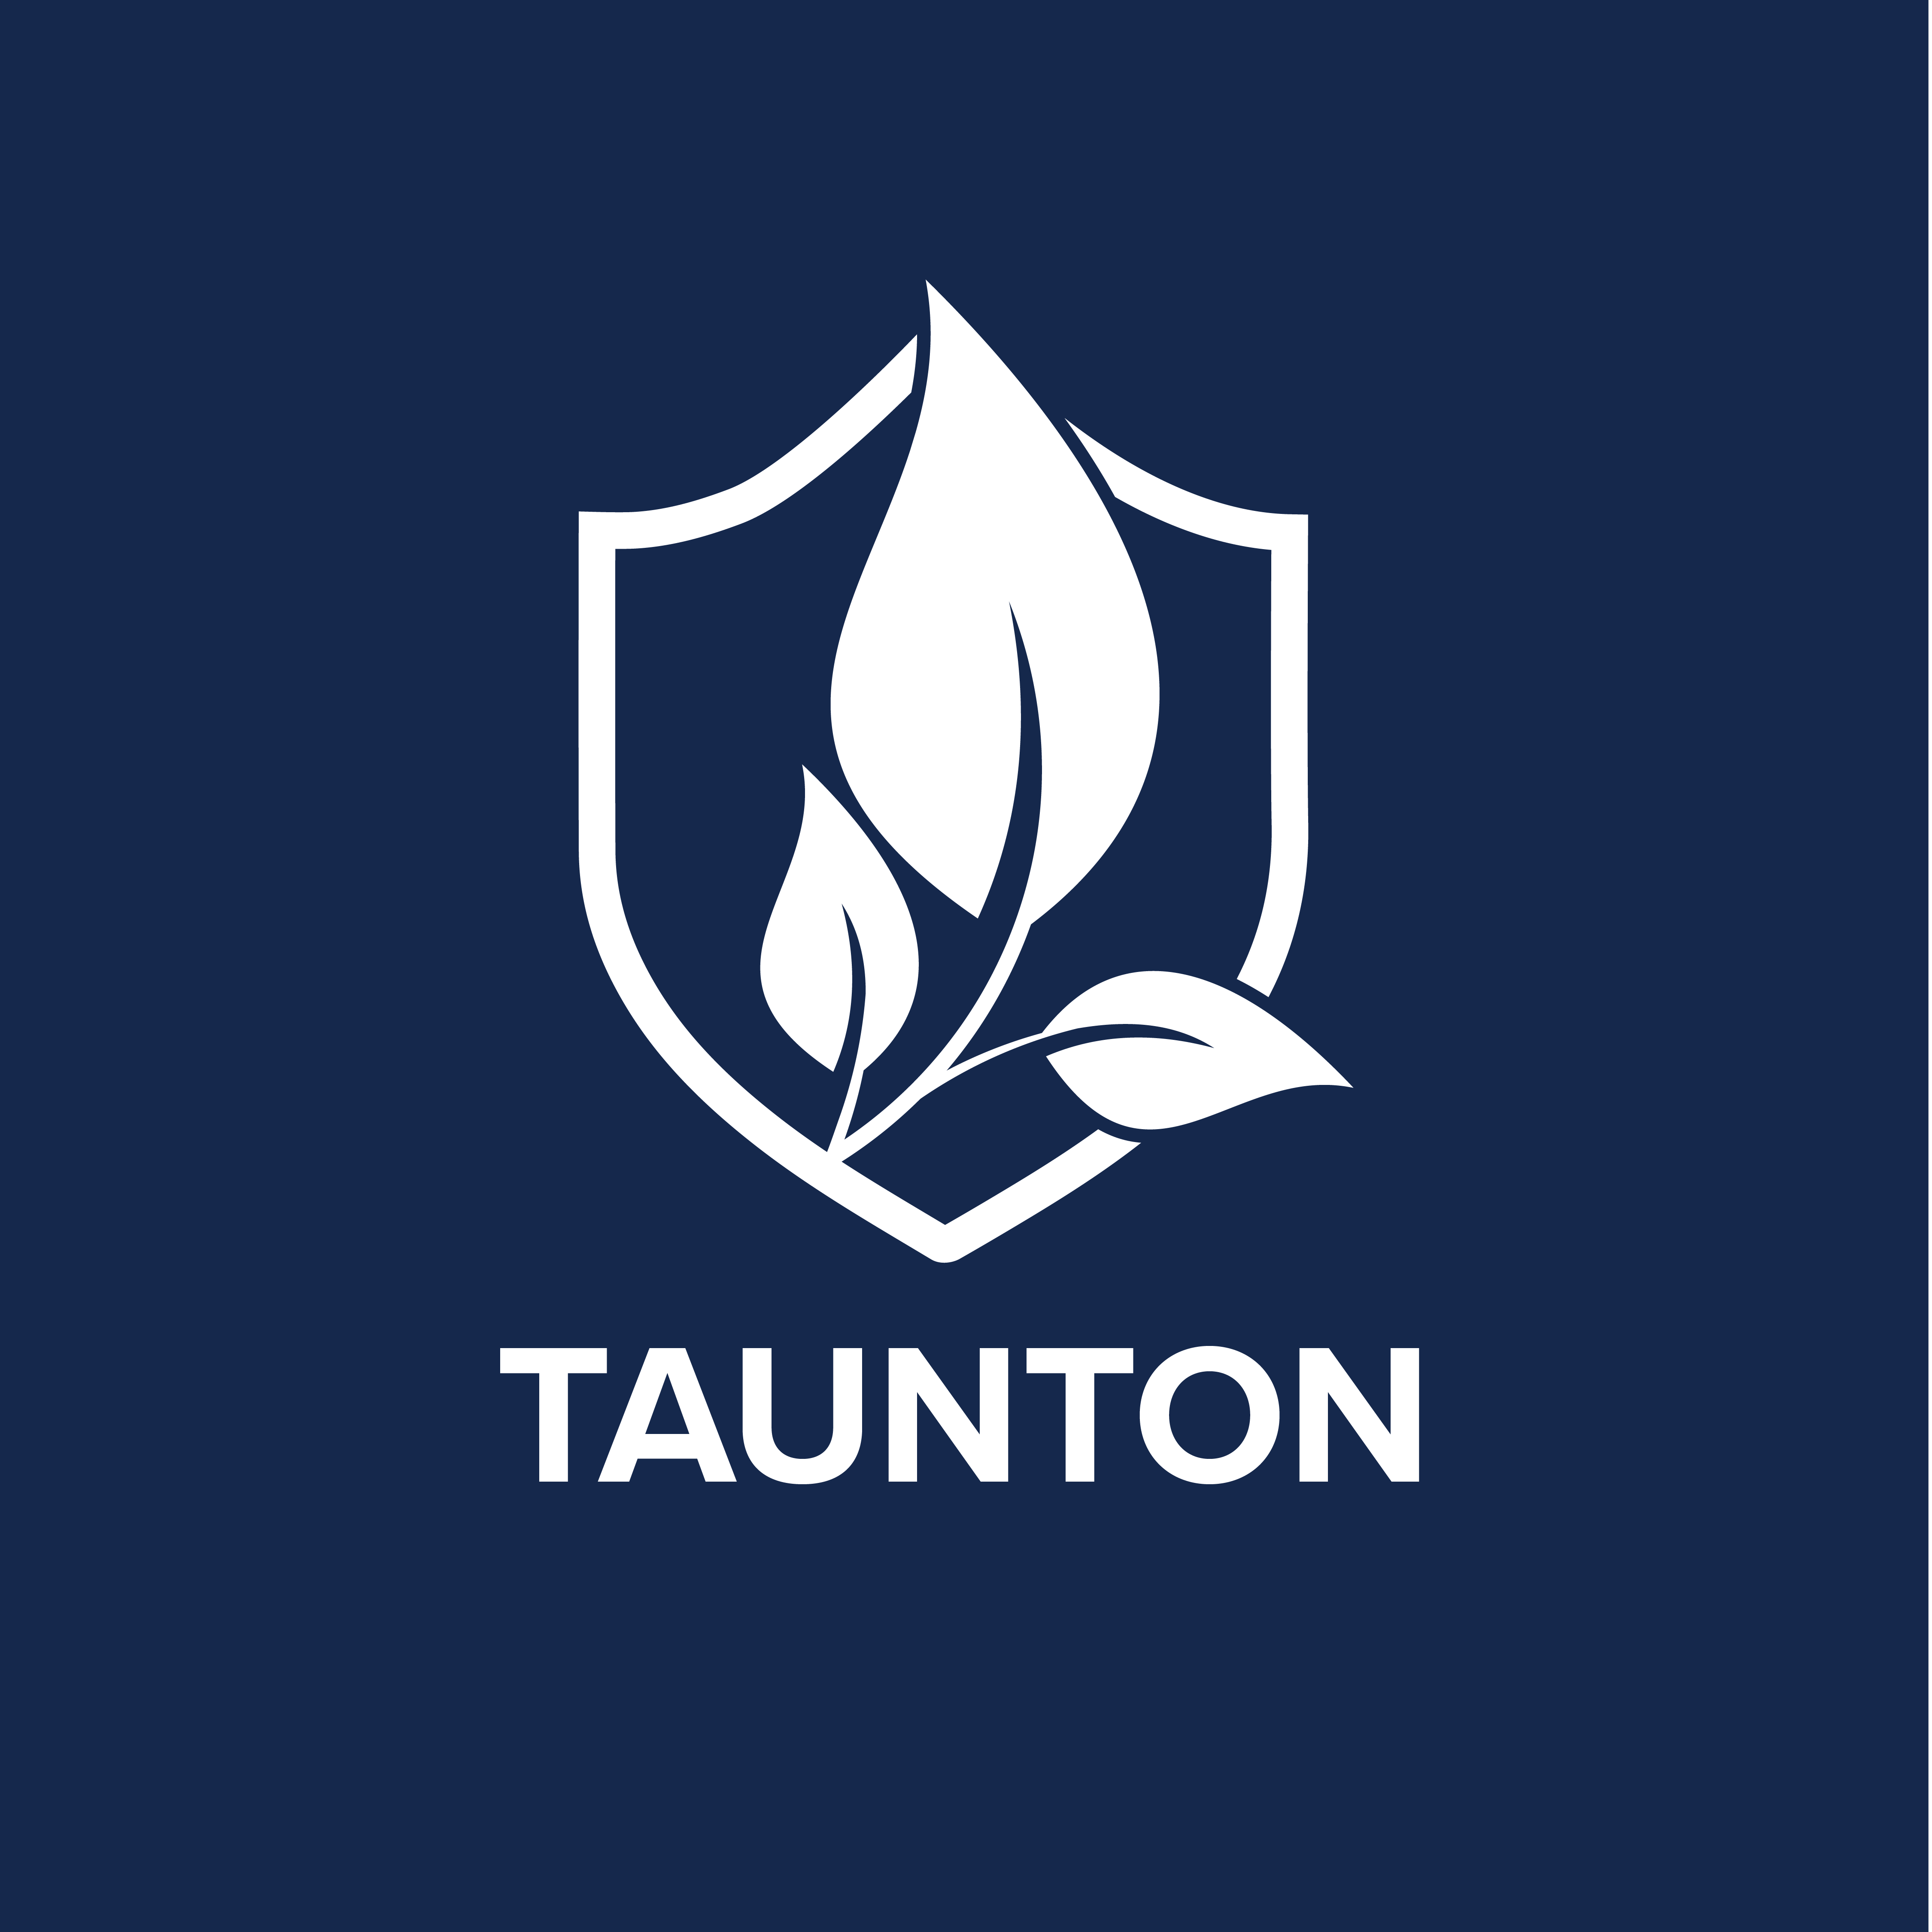 Commonwealth Alternative Care Taunton logo